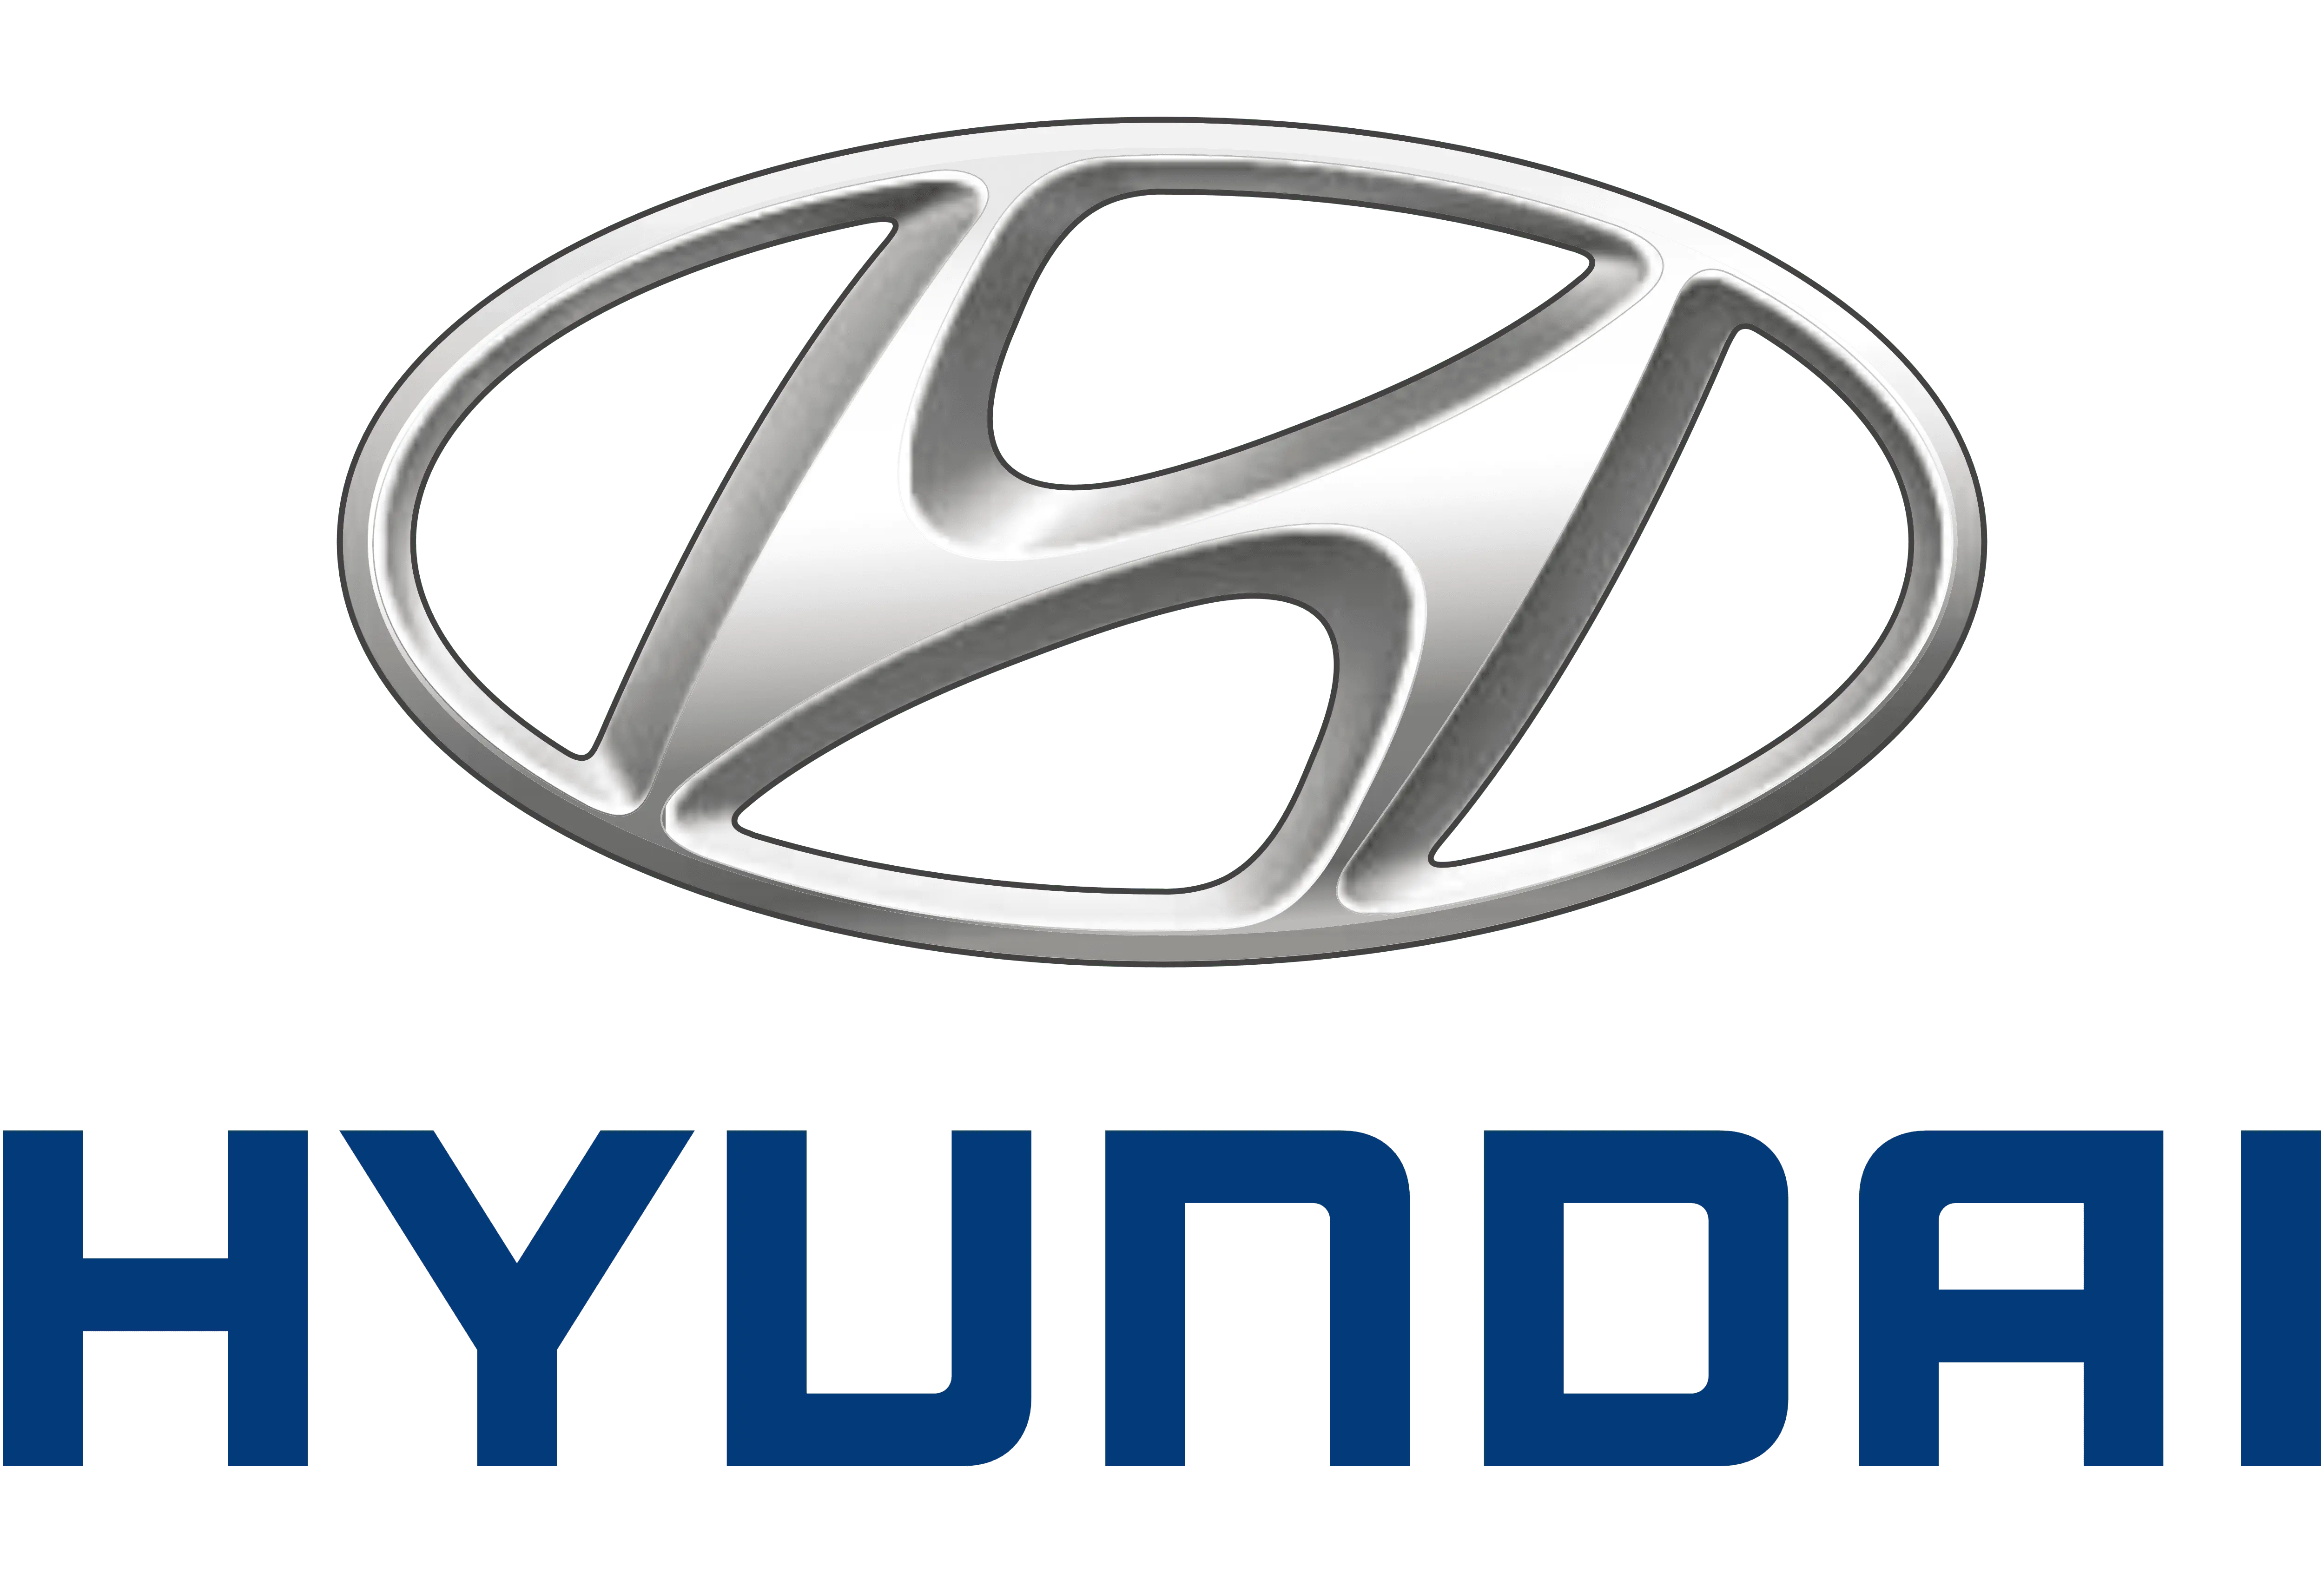 Hyundai - Case Study Yellow.ai